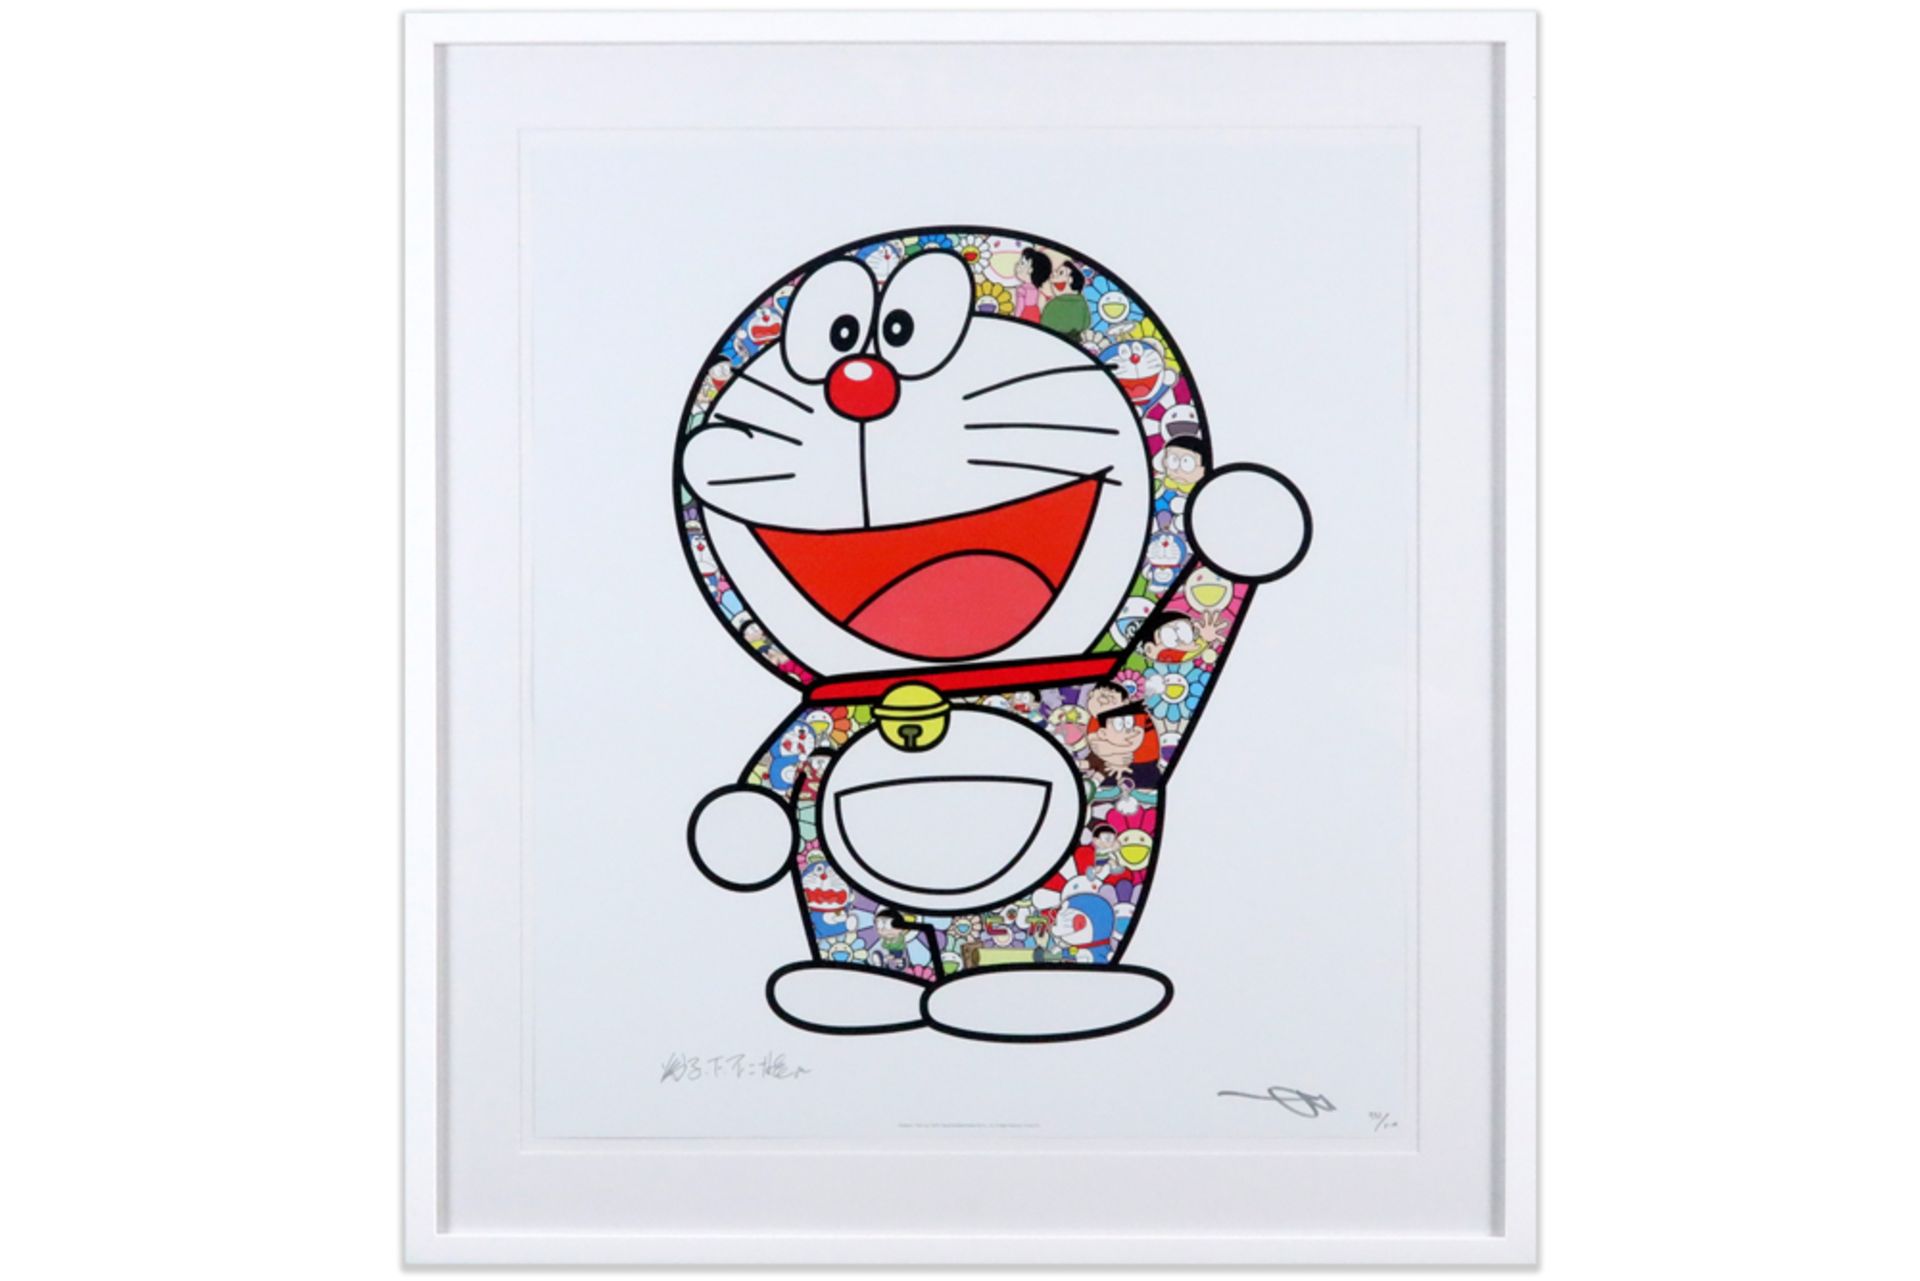 Takashi Murakami "Doraemon: Here we go! " signed offset lithograph printed in colors || MURAKAMI - Image 3 of 3